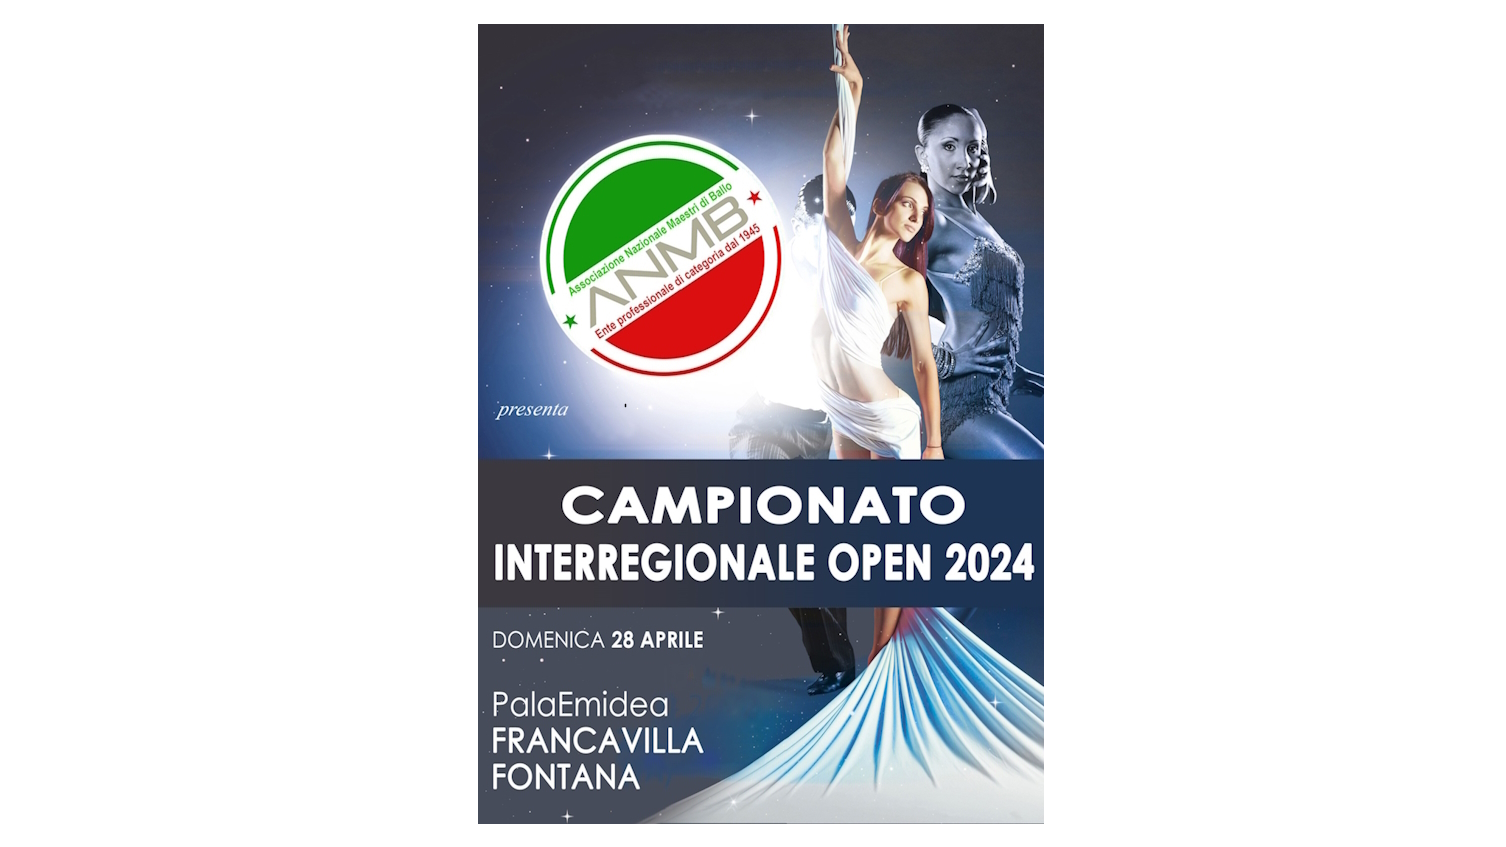 CAMPIONATO INTERREGIONALE 2024 cover image